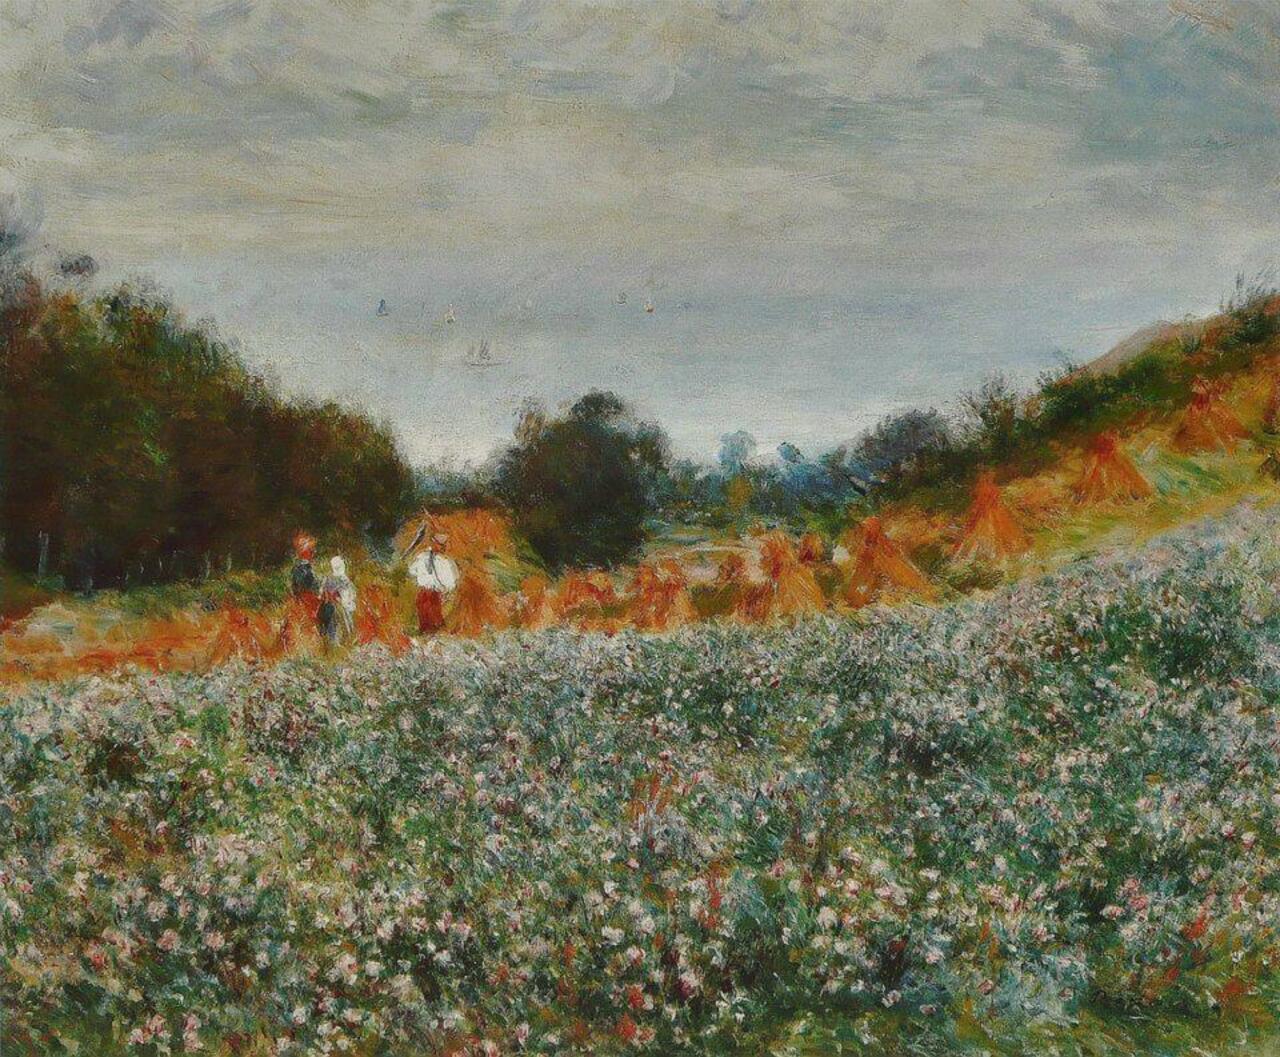 #Impressionism Pierre-Auguste #Renoir,"La Moisson Ã erneval" 1880 #art #Tweetart #artTW #shareArt http://t.co/jHzn0Xoc9D